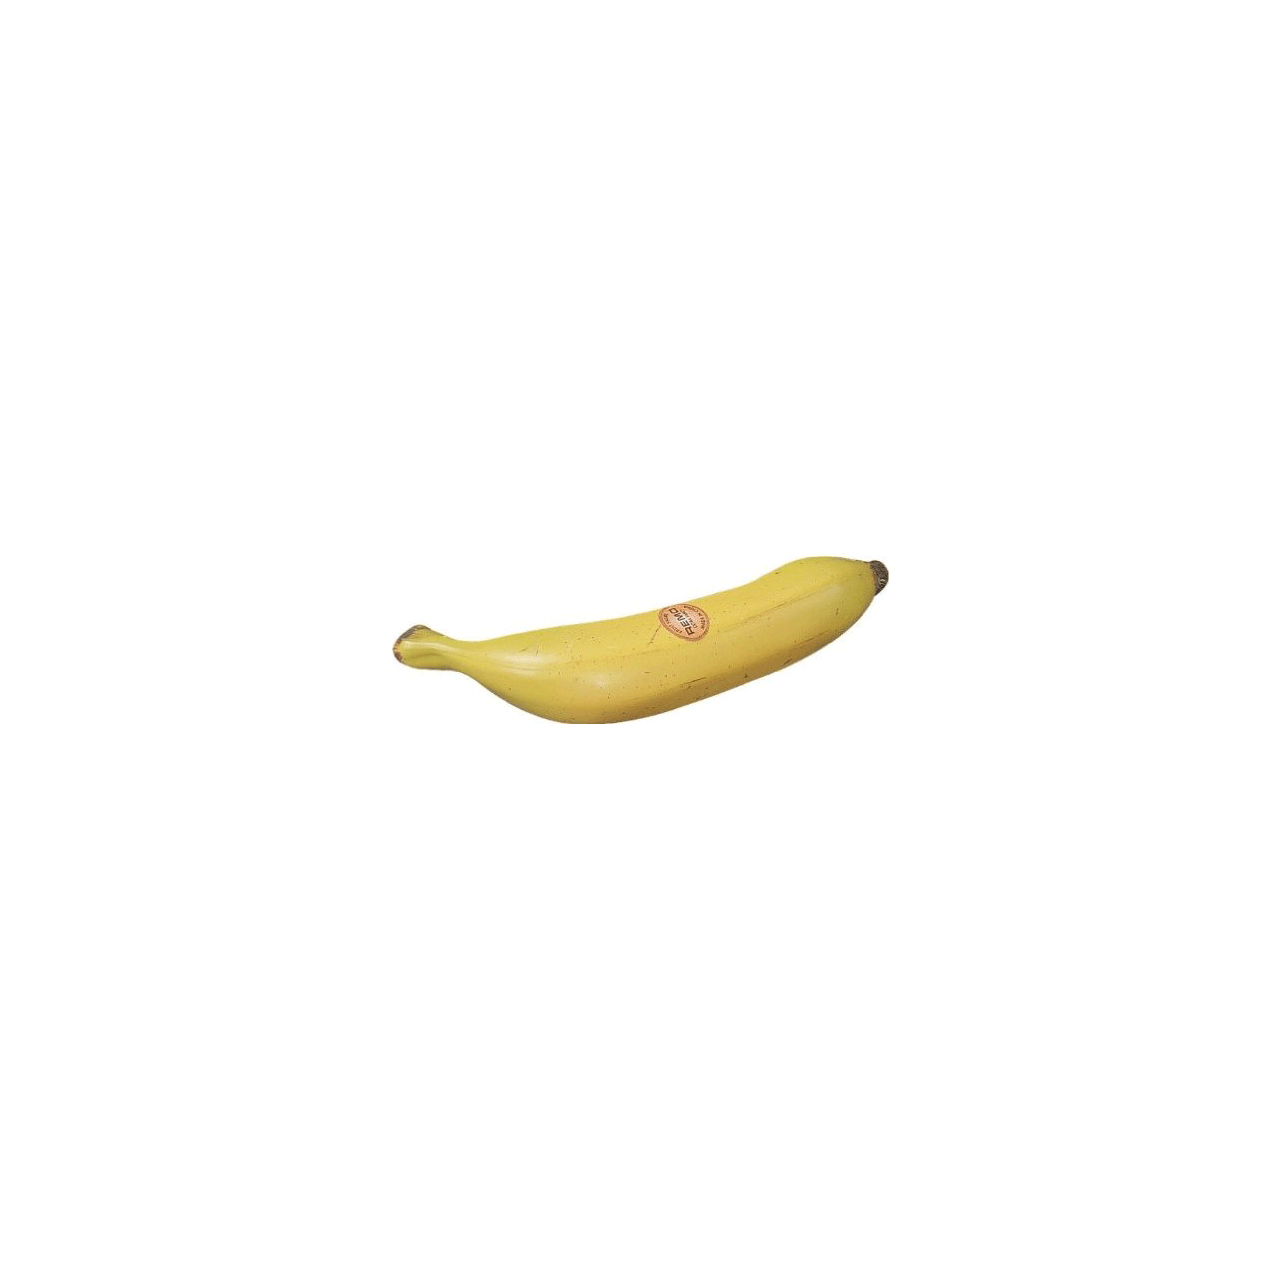 Remo Fruit Shaker Banane BANA